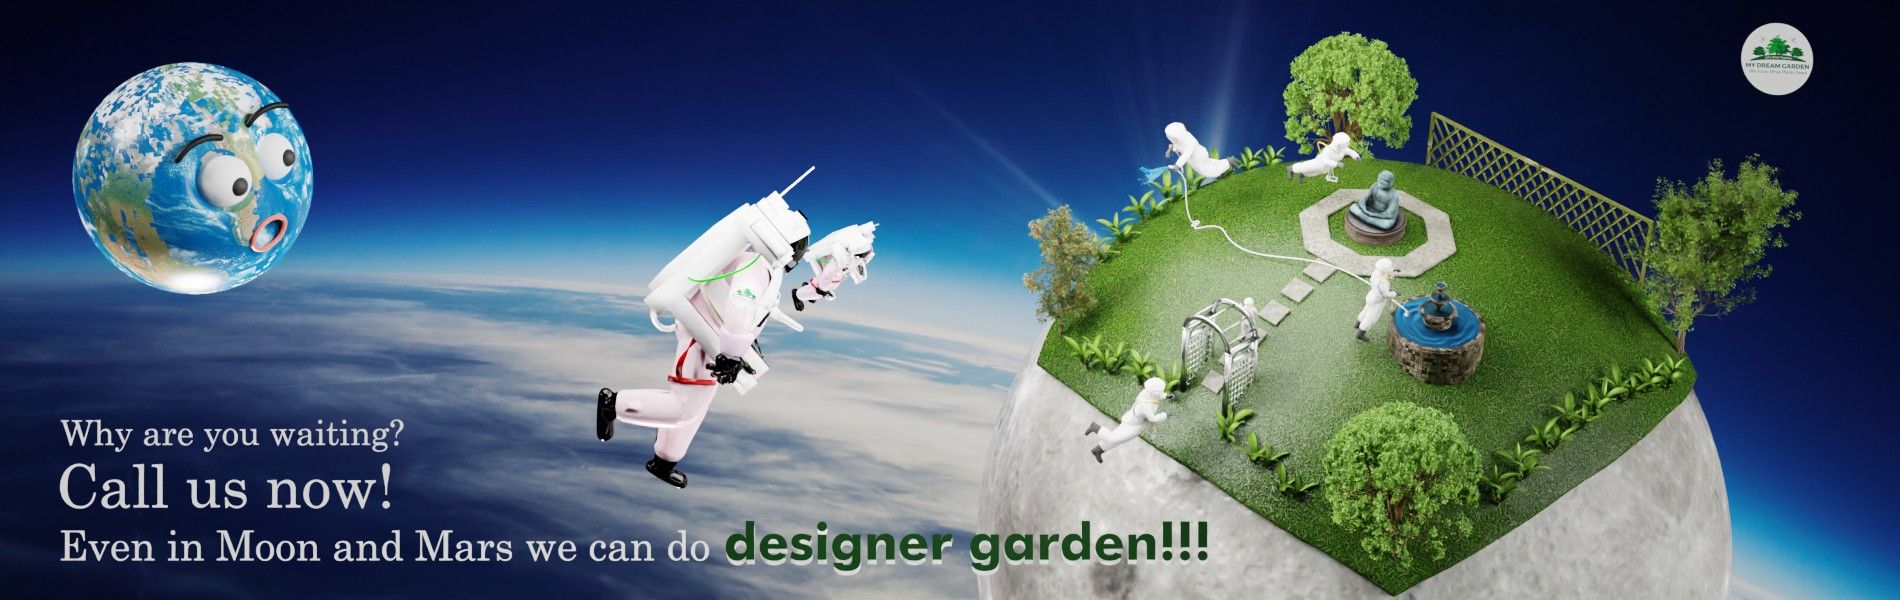 My Dream Garden Pvt. Ltd.